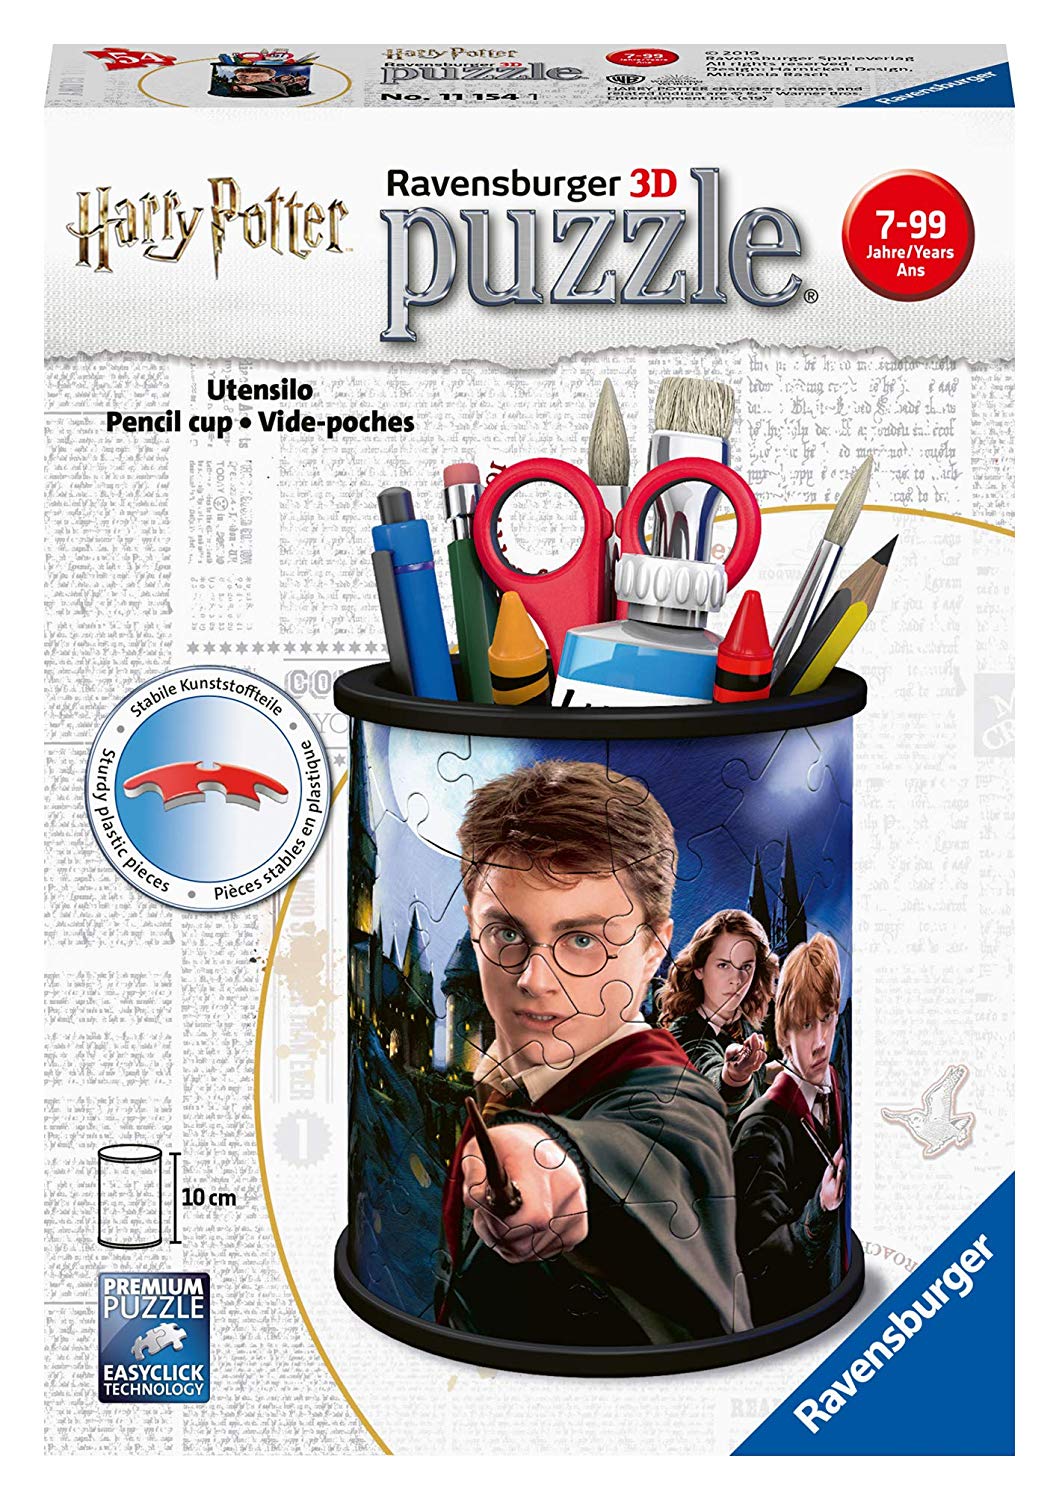 Ravensburger Puzzle 11154 Harry Potter Utensilo